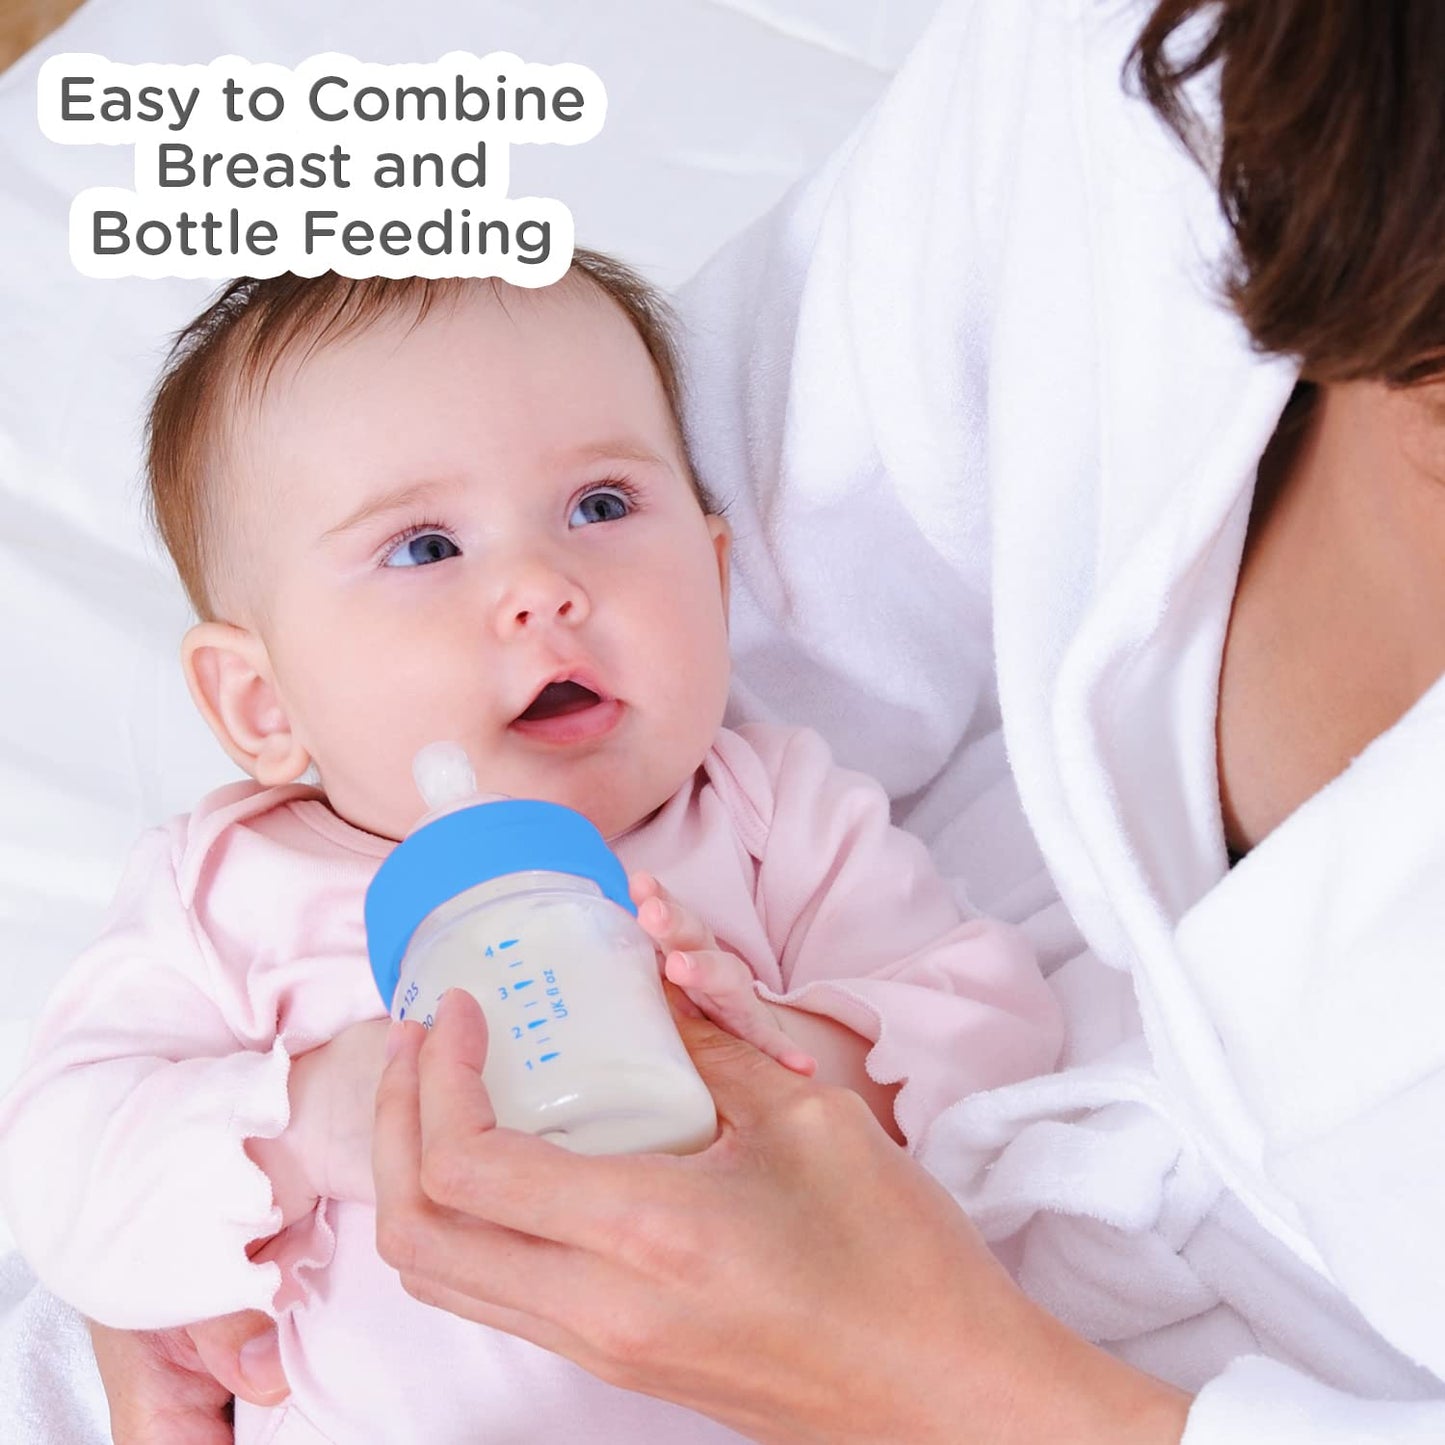 Mee Mee Eazy Flo Premium Baby Feeding Bottle (Blue, 250 ml- Single Pack)